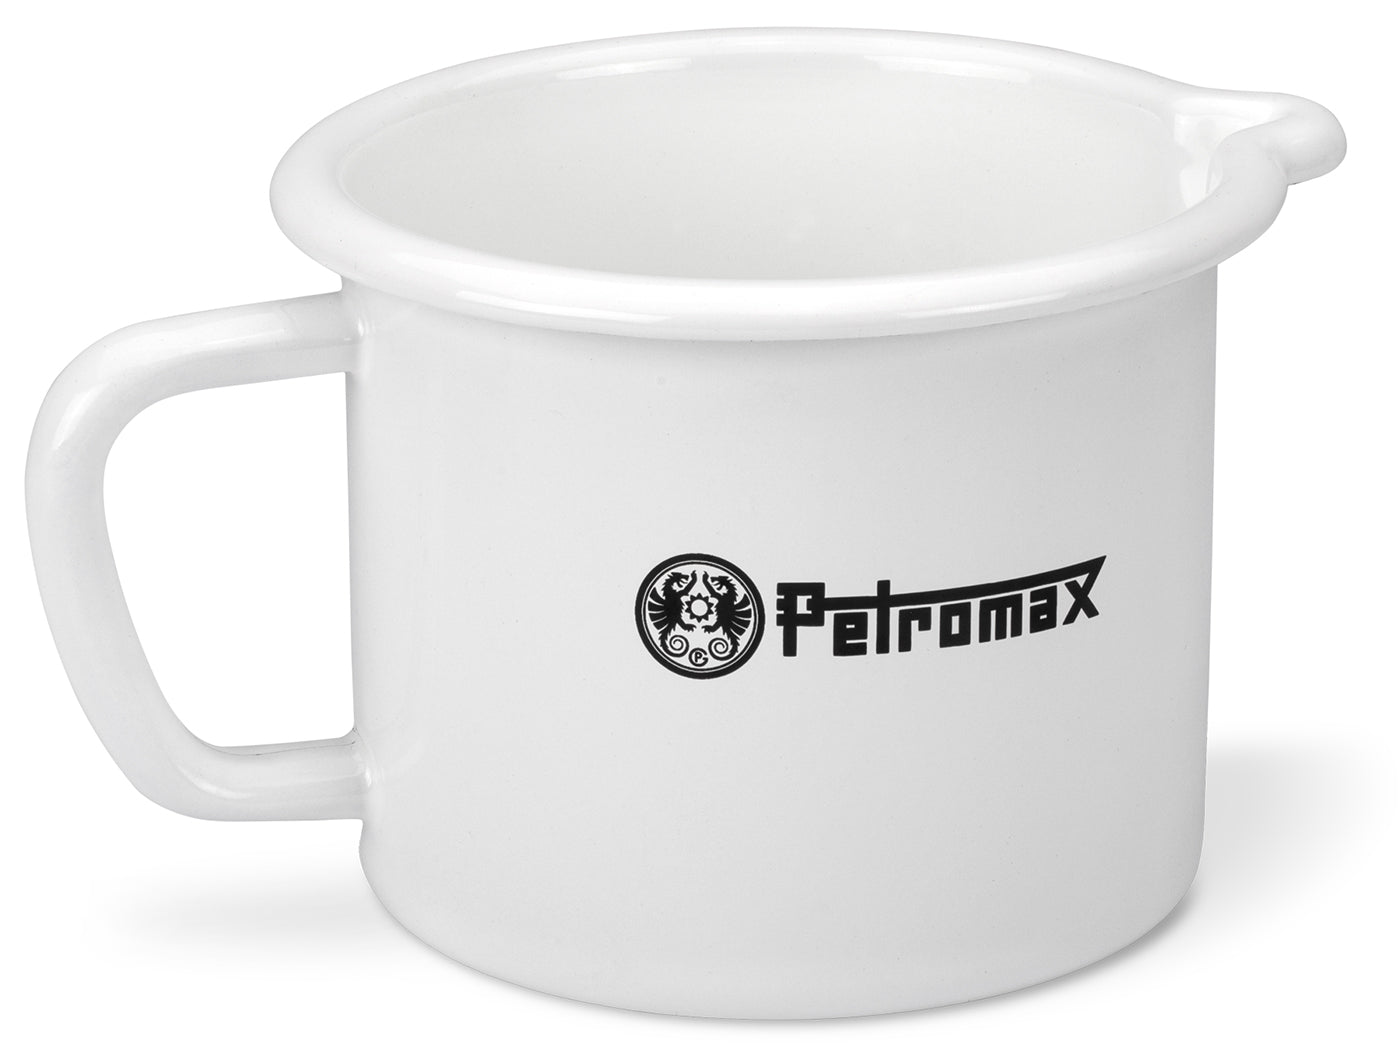 Petromax enamel milk jug 1.4 White